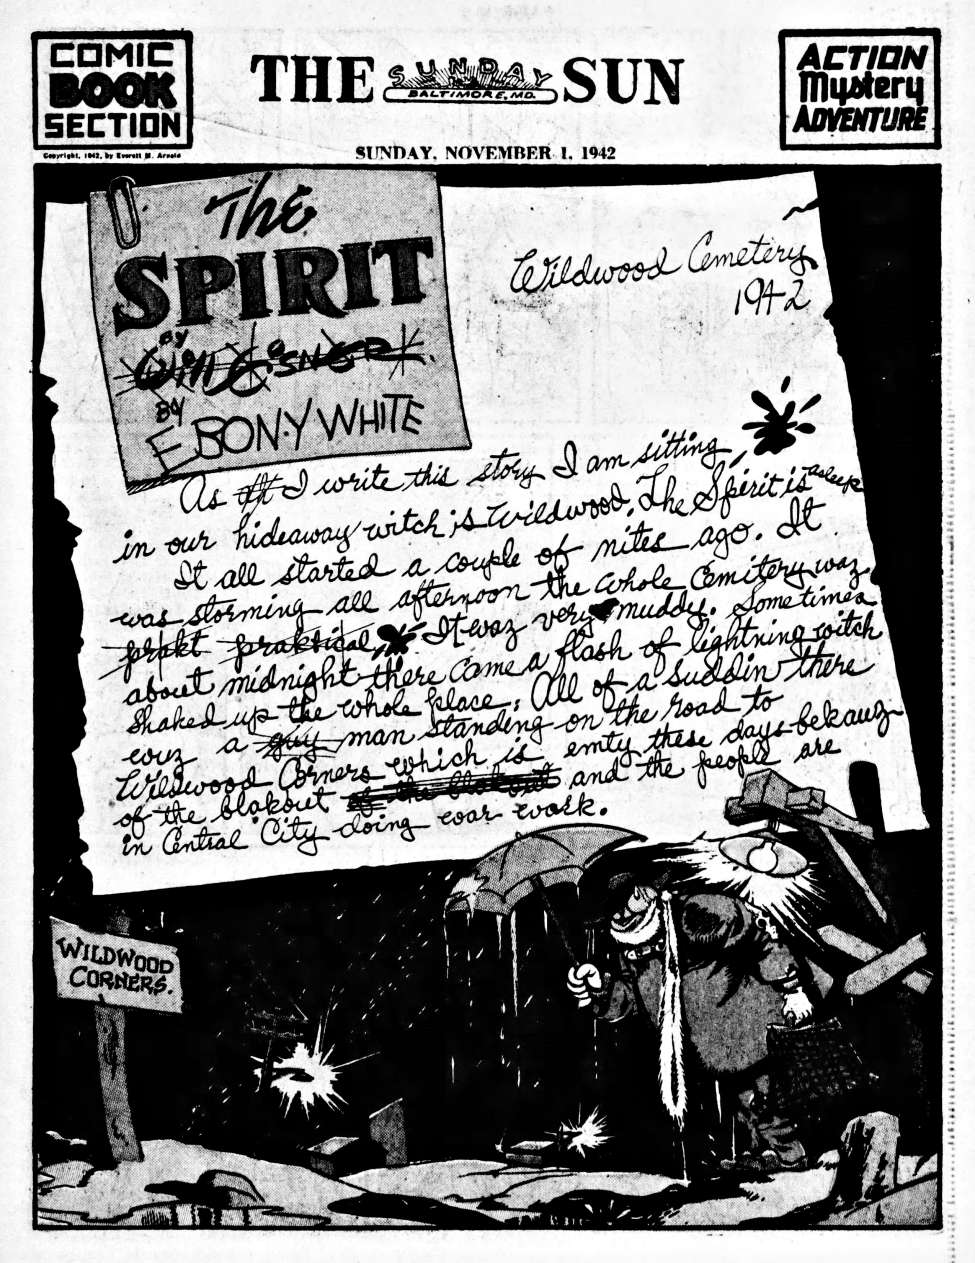 Comic Book Cover For The Spirit (1942-11-01) - Baltimore Sun (b/w)